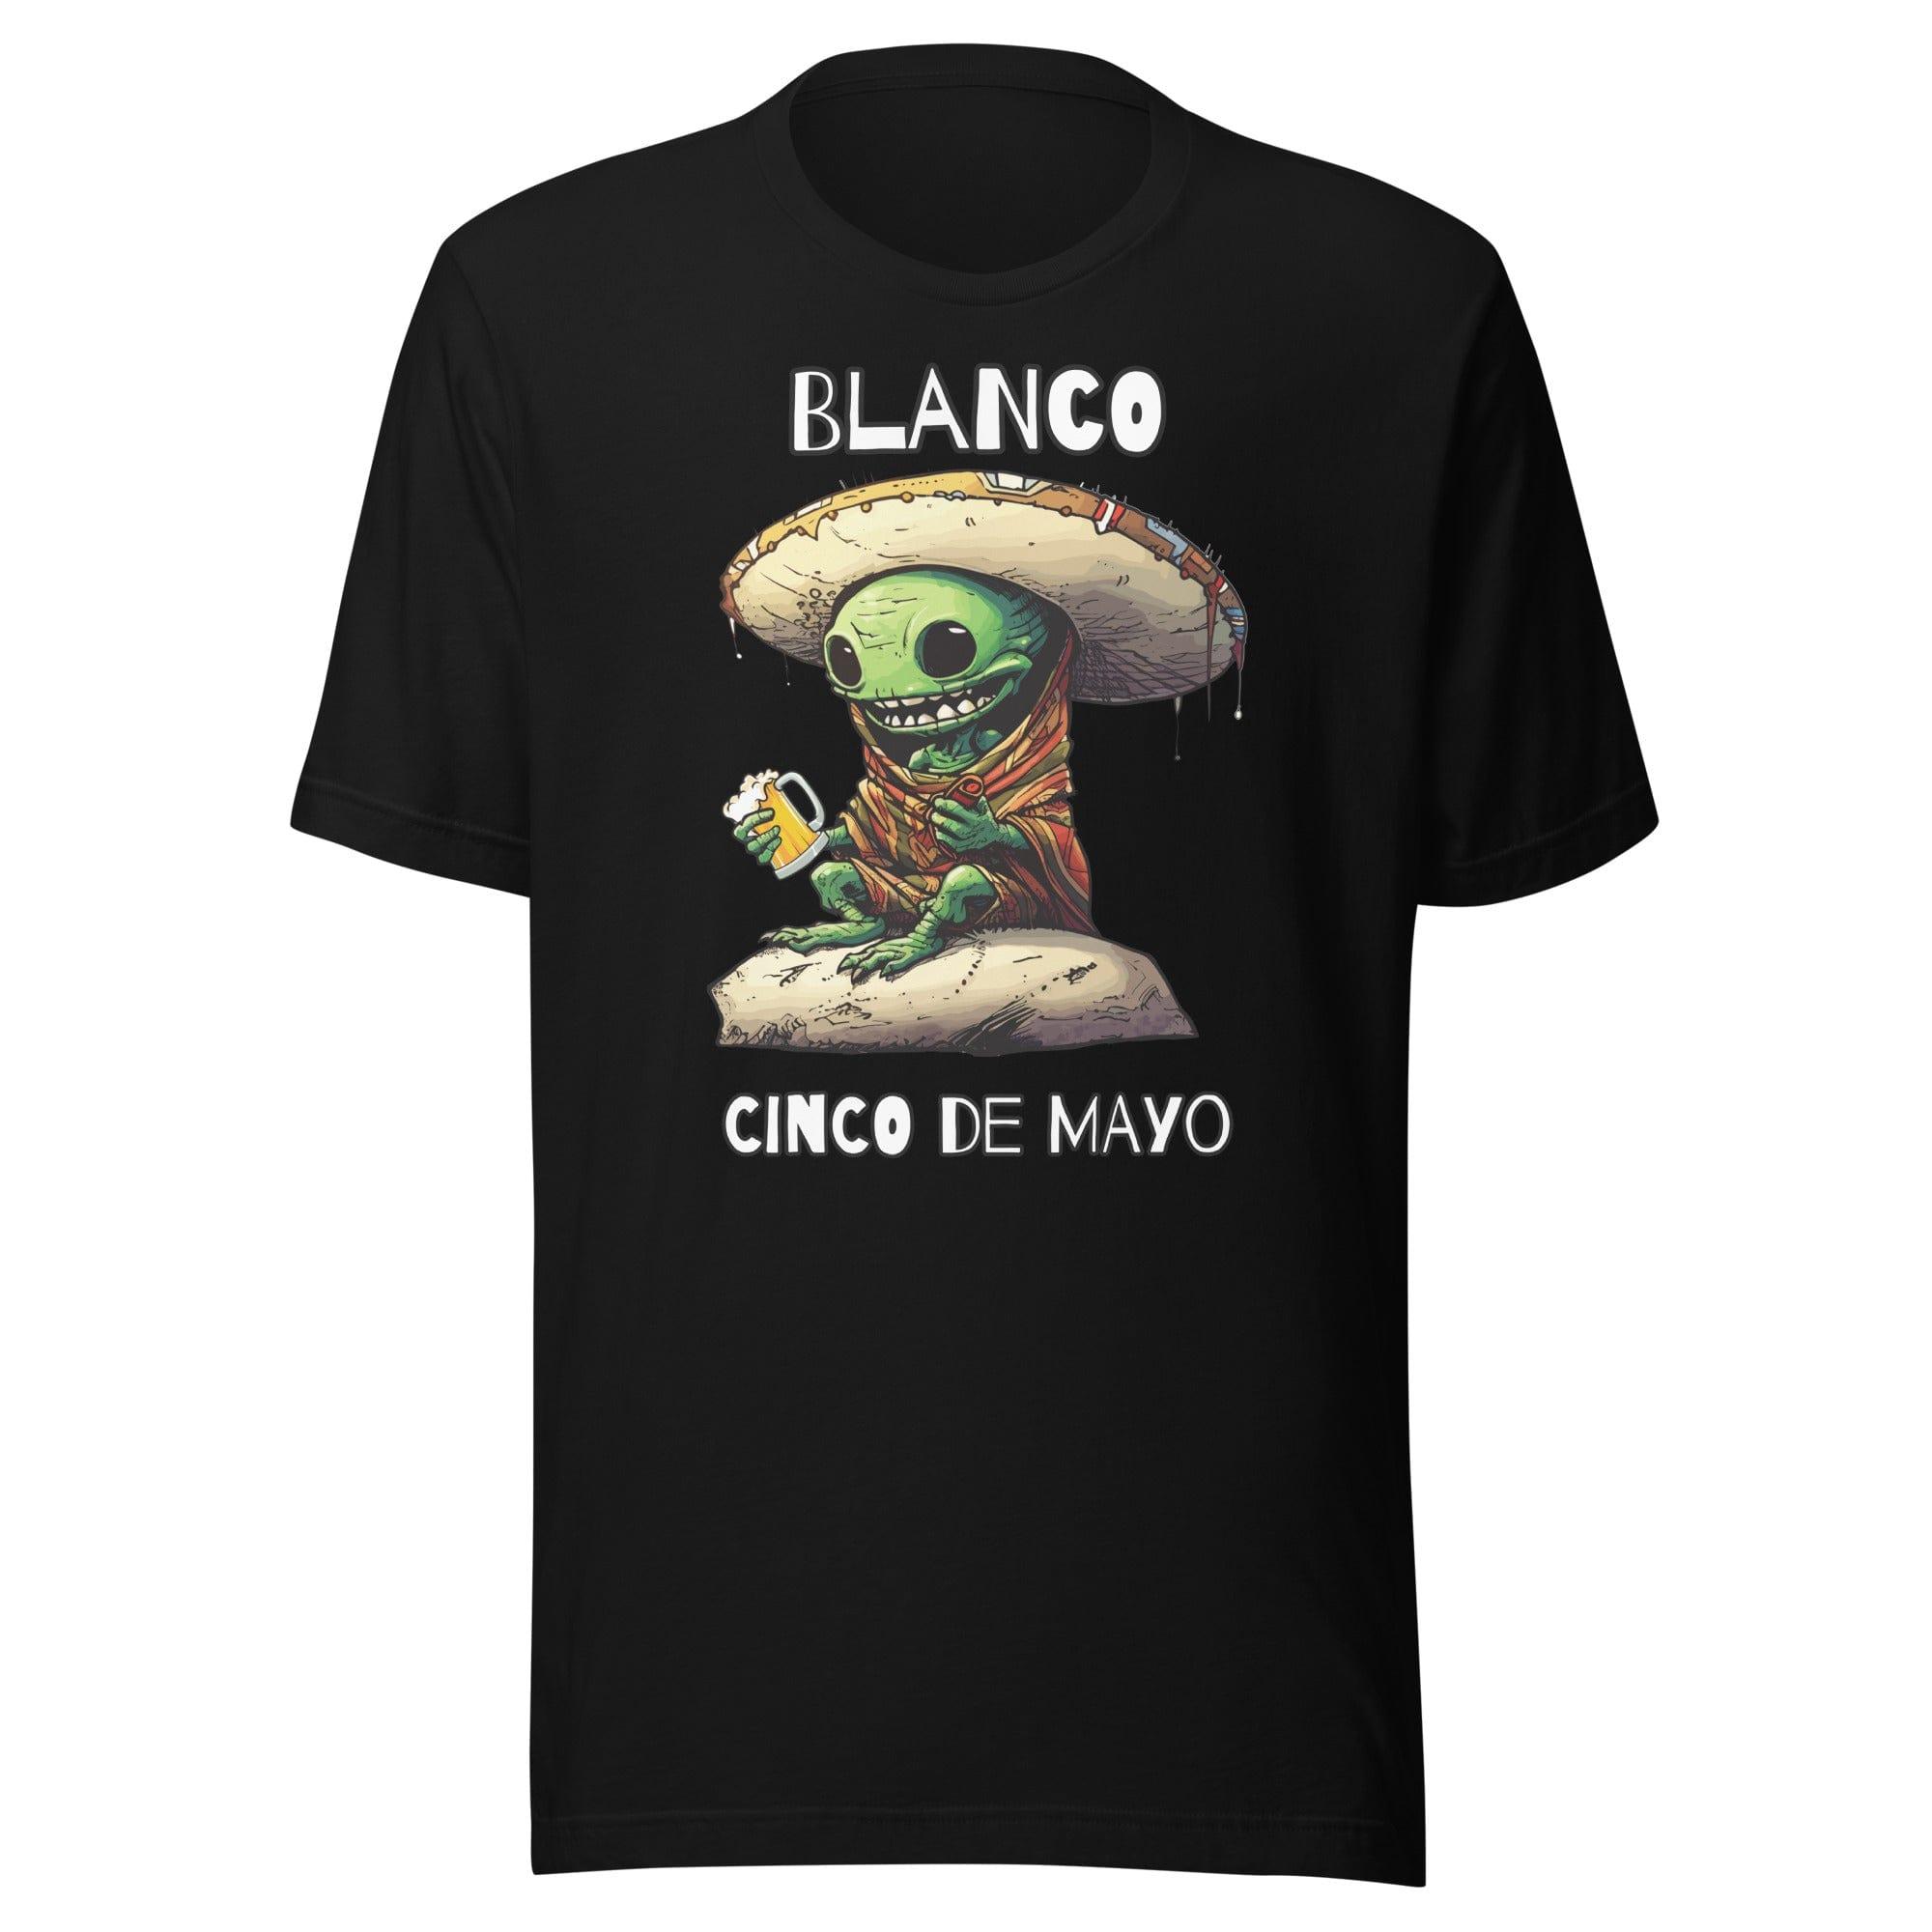 Tequila T-shirt Blanco Alien Sombrero Series Unisex Top - TopKoalaTee